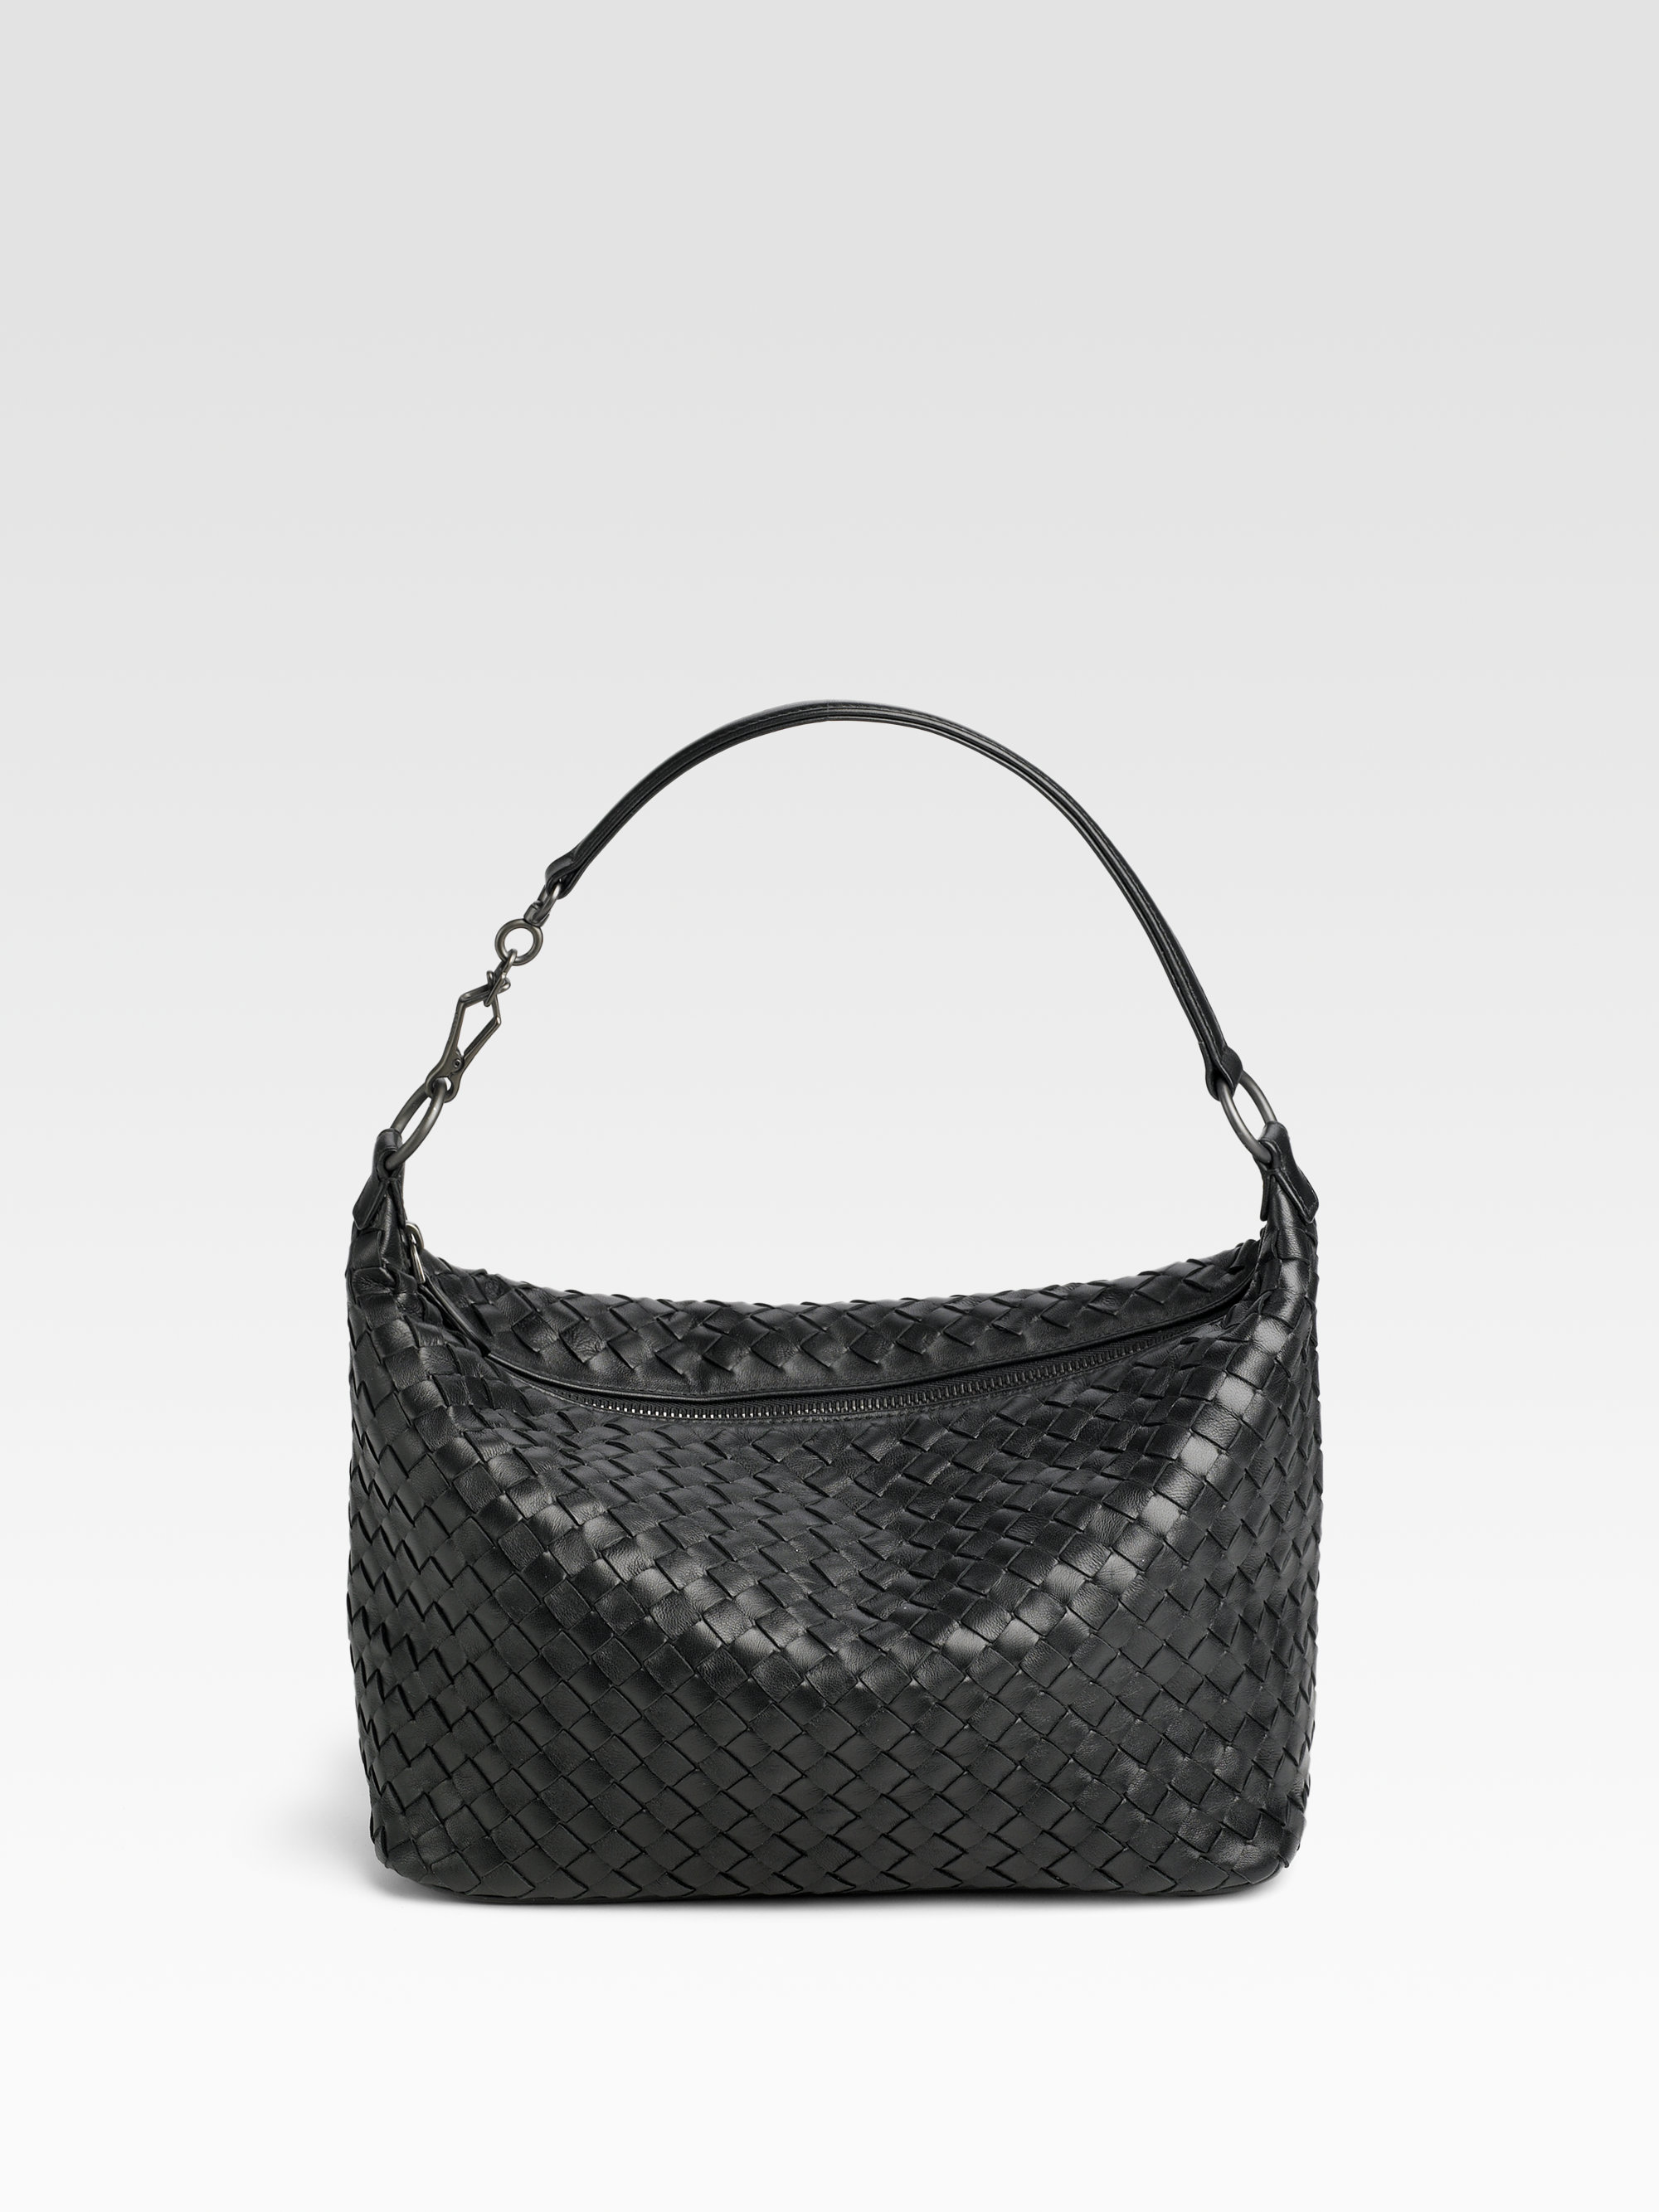 Bottega Veneta Woven Leather Small Shoulder Bag in Black | Lyst